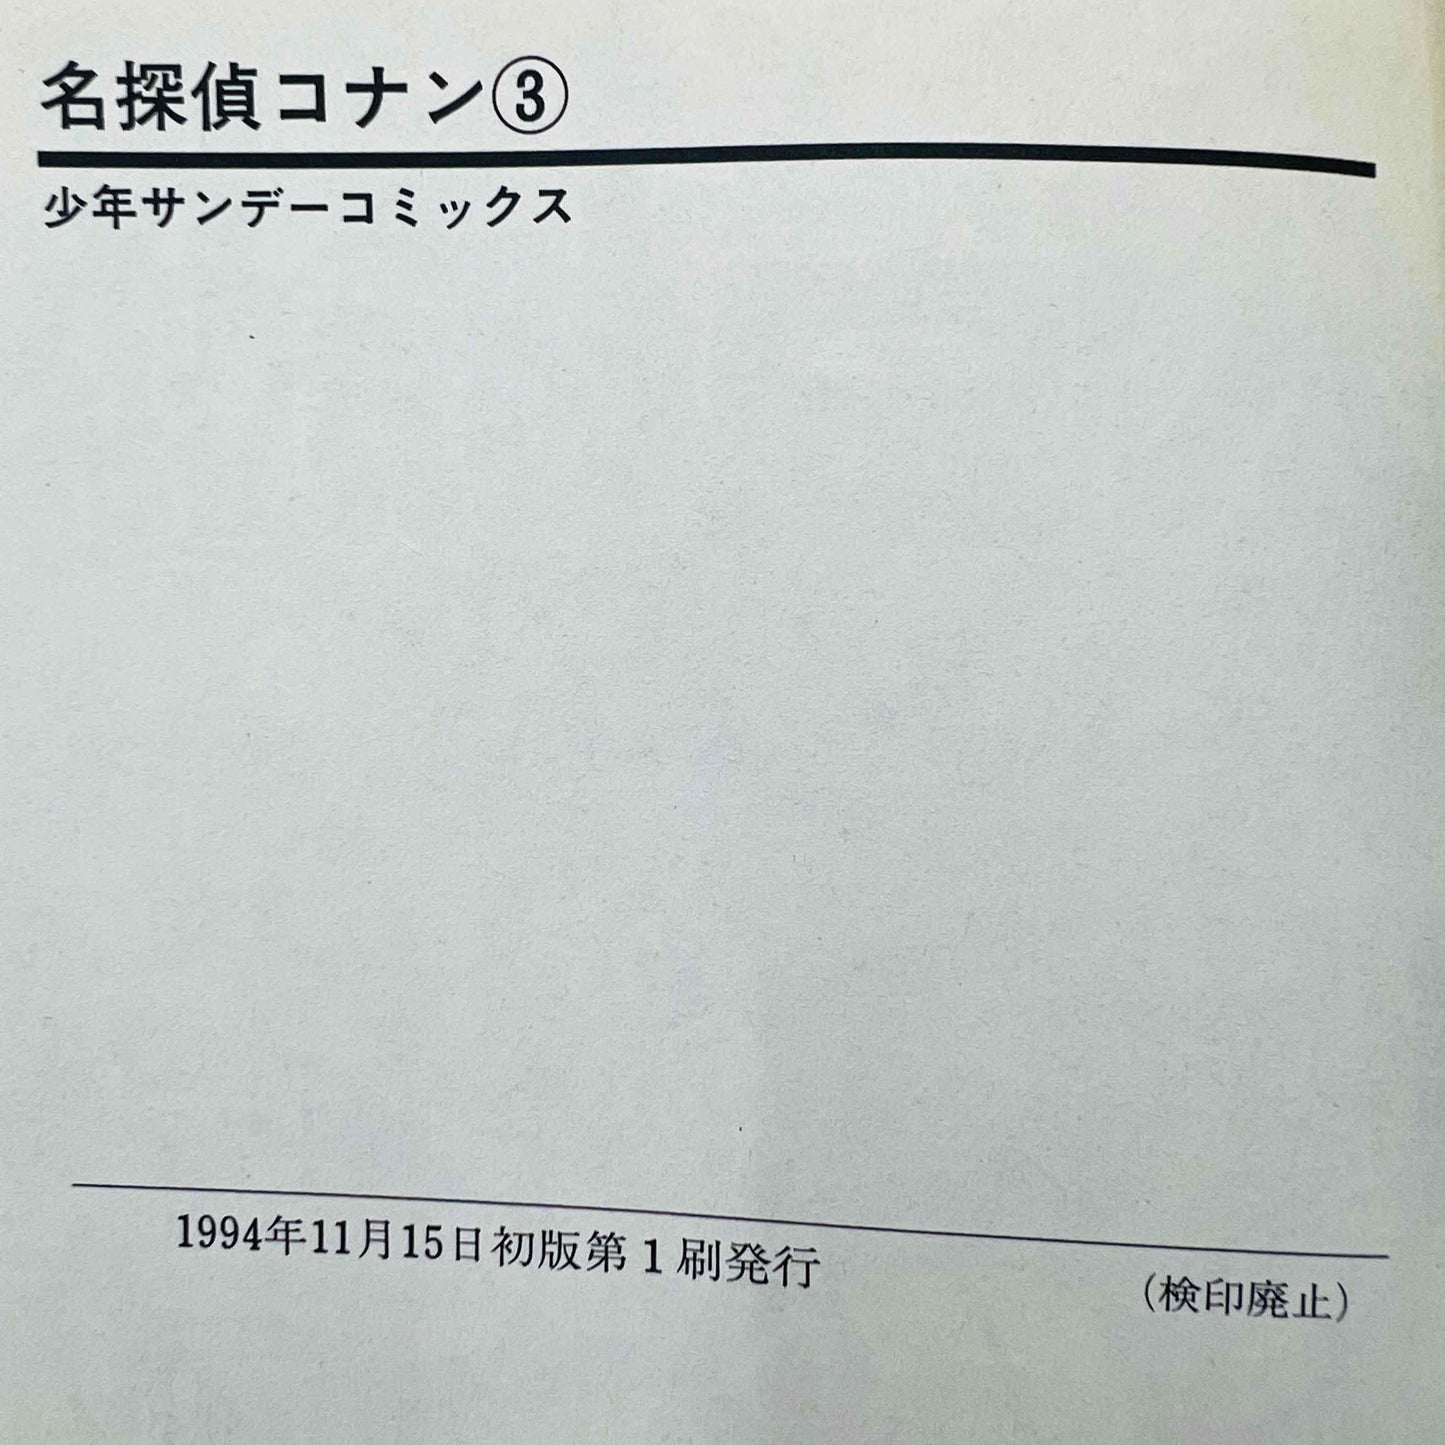 Detective Conan - Volume 03 - 1stPrint.net - 1st First Print Edition Manga Store - M-CONAN-03-001